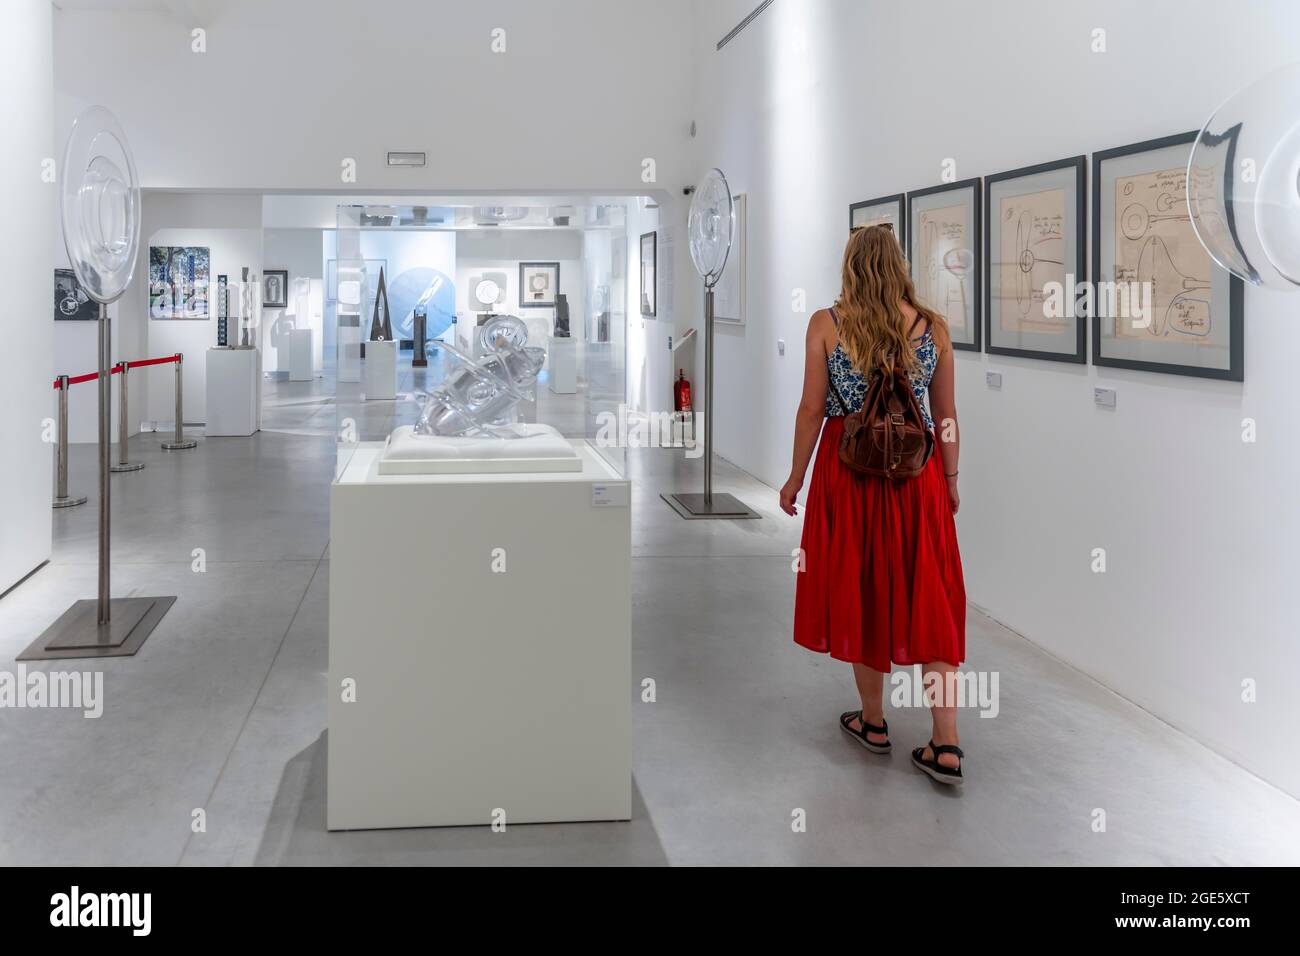 Museo del vetro -Fotos und -Bildmaterial in hoher Auflösung – Alamy